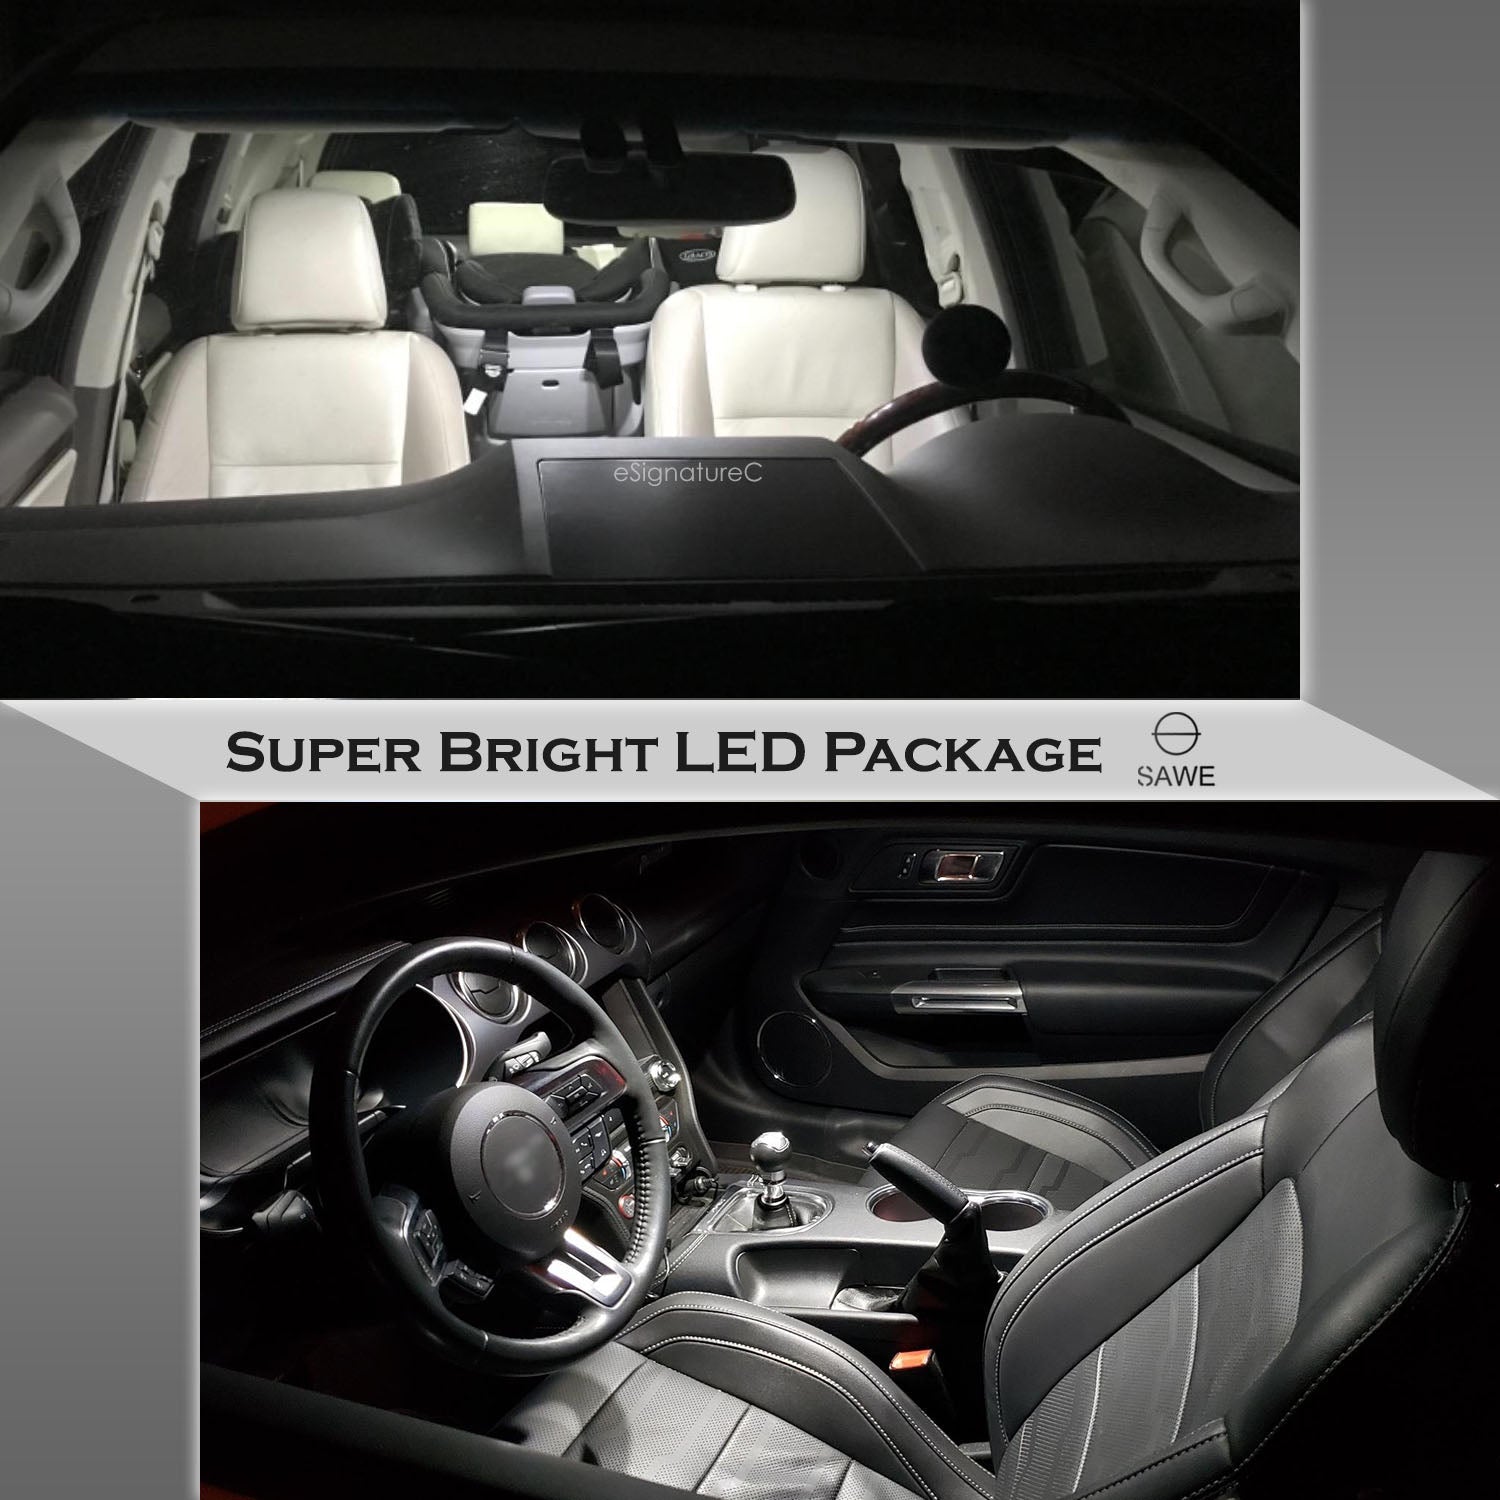 For Chevrolet Sonic Interior LED Lights - Dome & Map Lights Package Kit for 2012 - 2017 - White